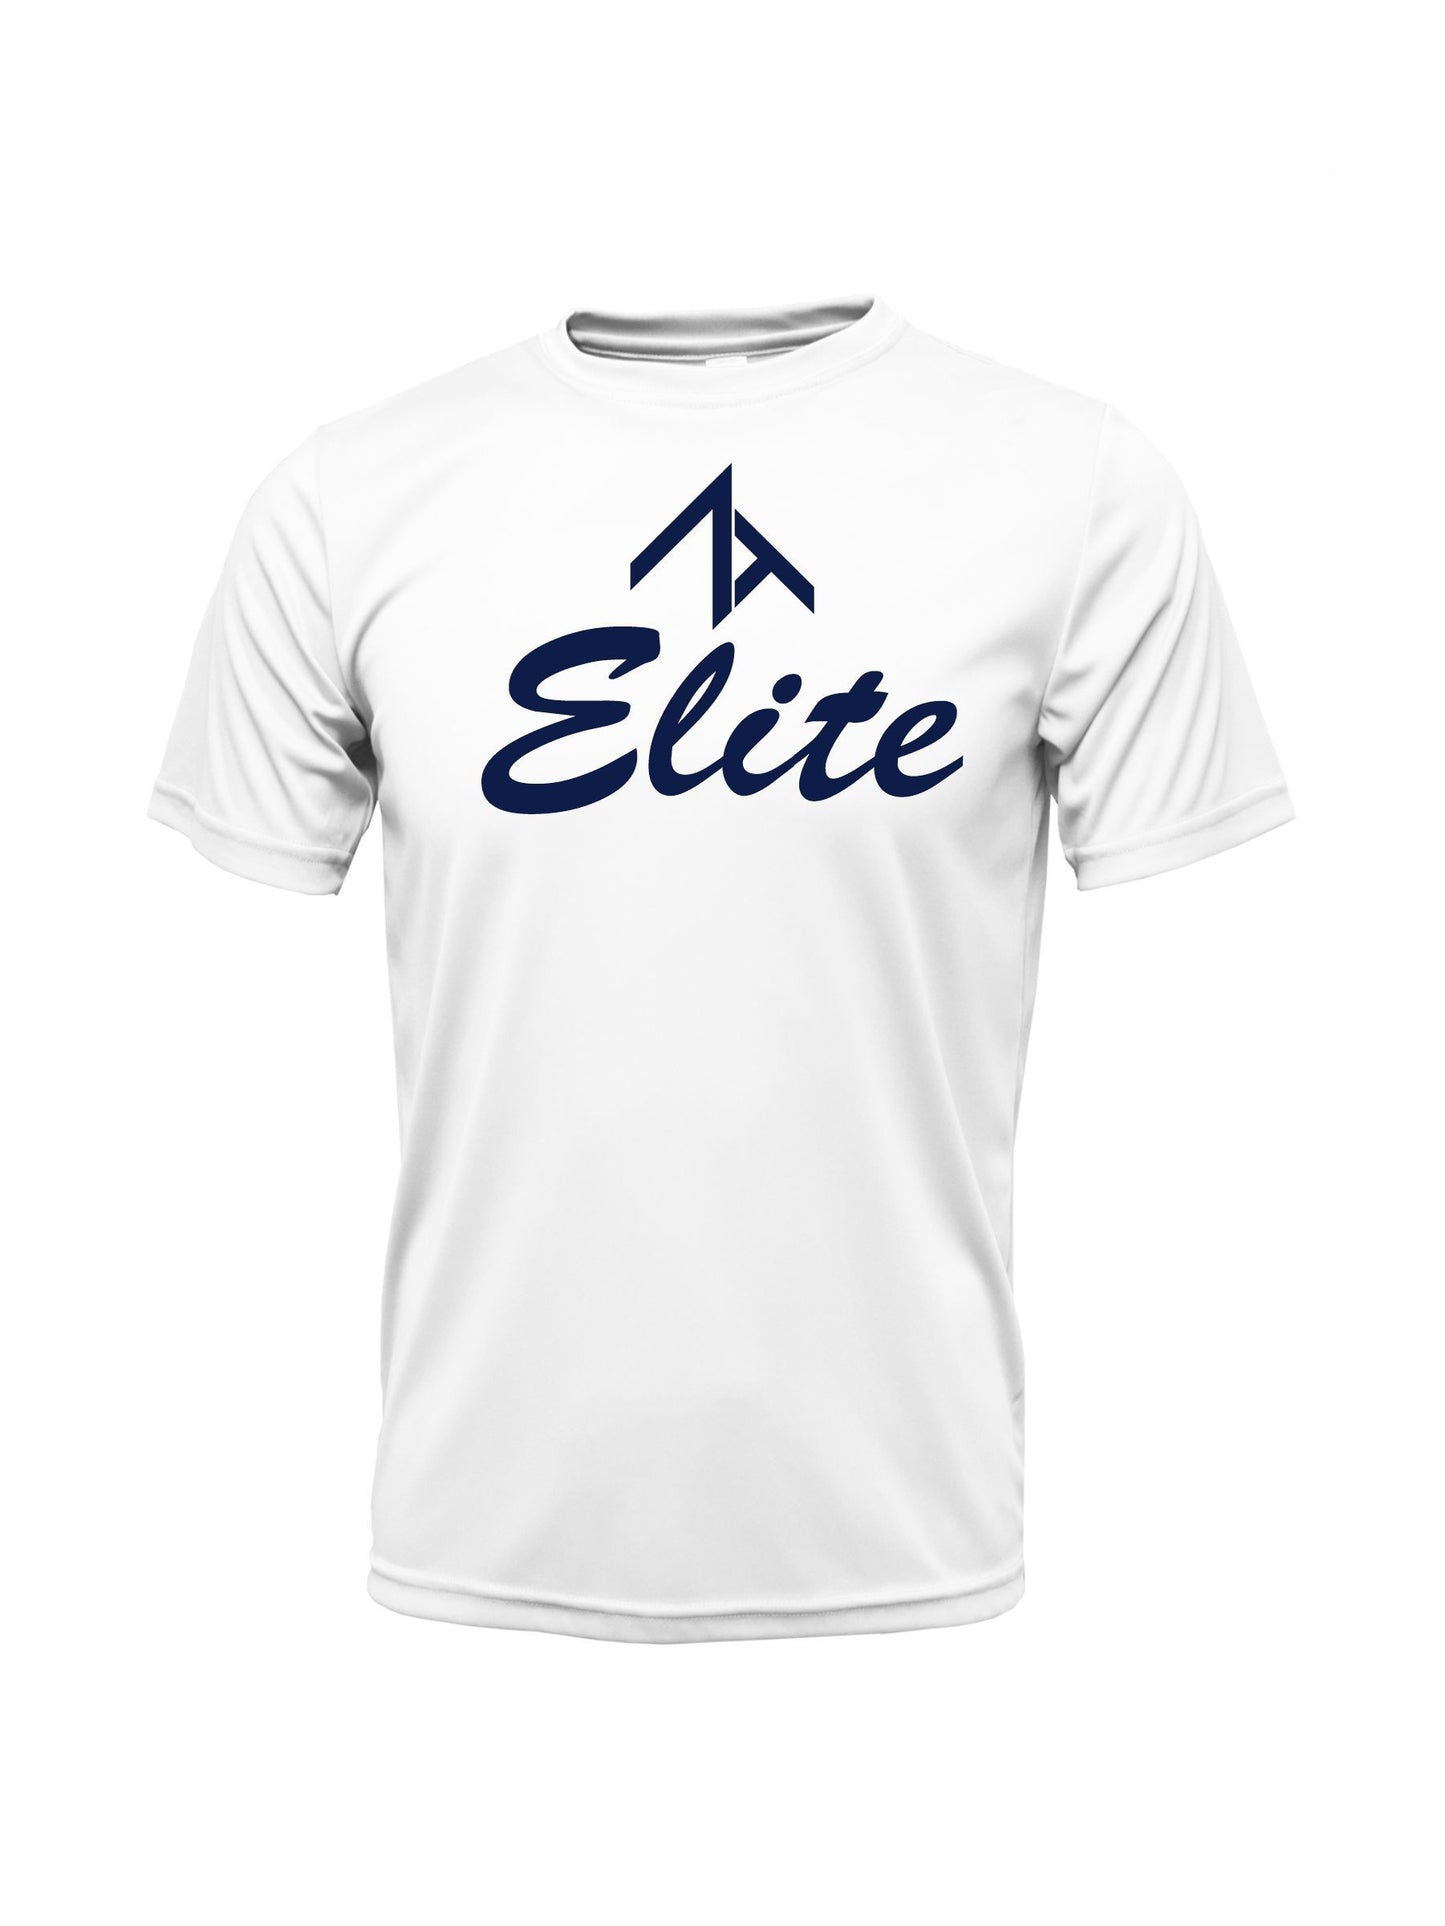 Short Sleeve "CENTERED ELITE" Cotton T-shirt